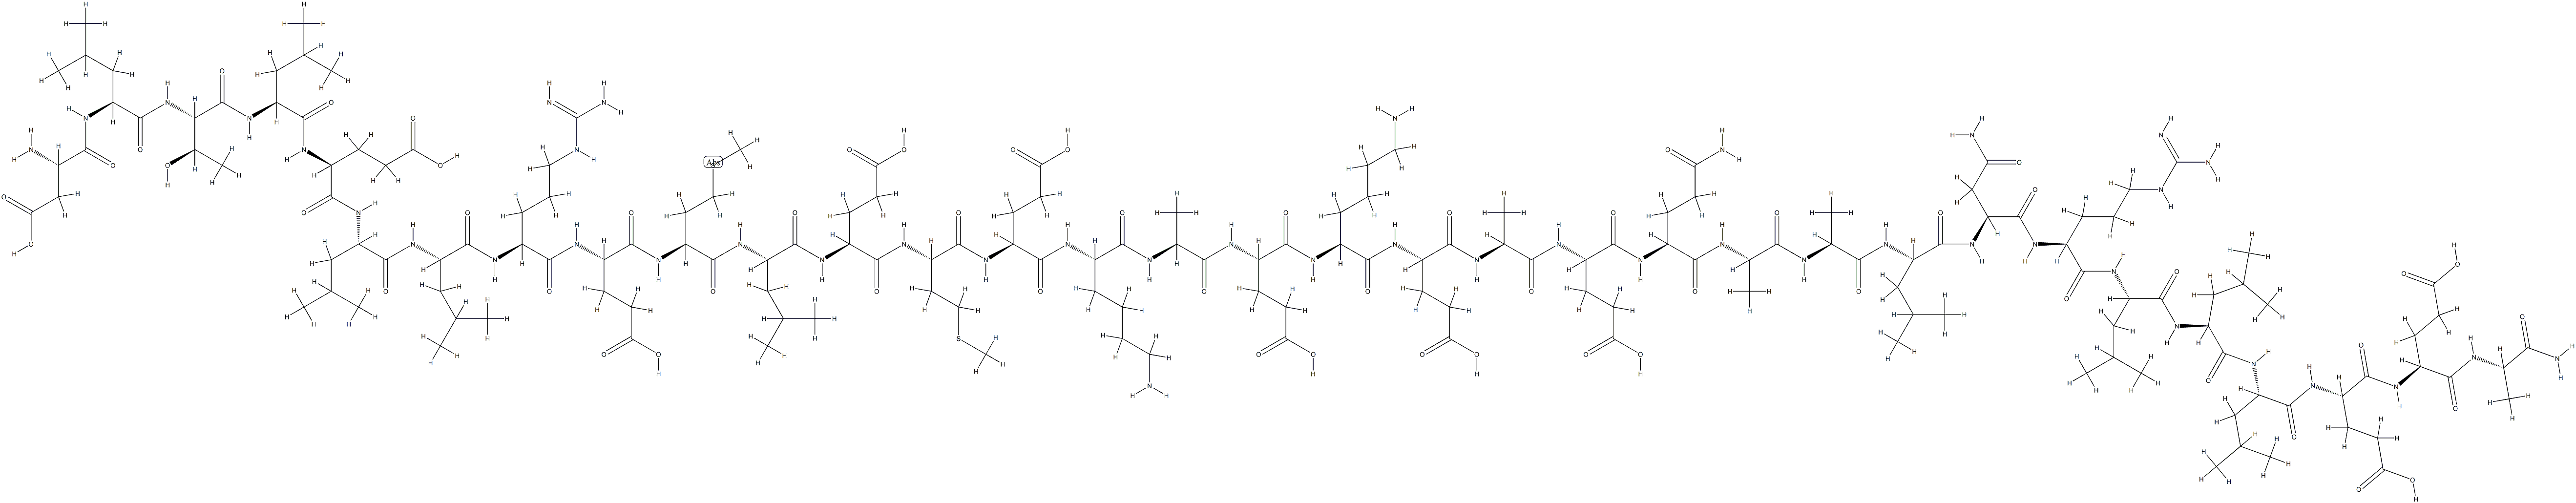 corticotropin releasing hormone (9-41)|促肾上腺皮质激素释放激素(9-41)